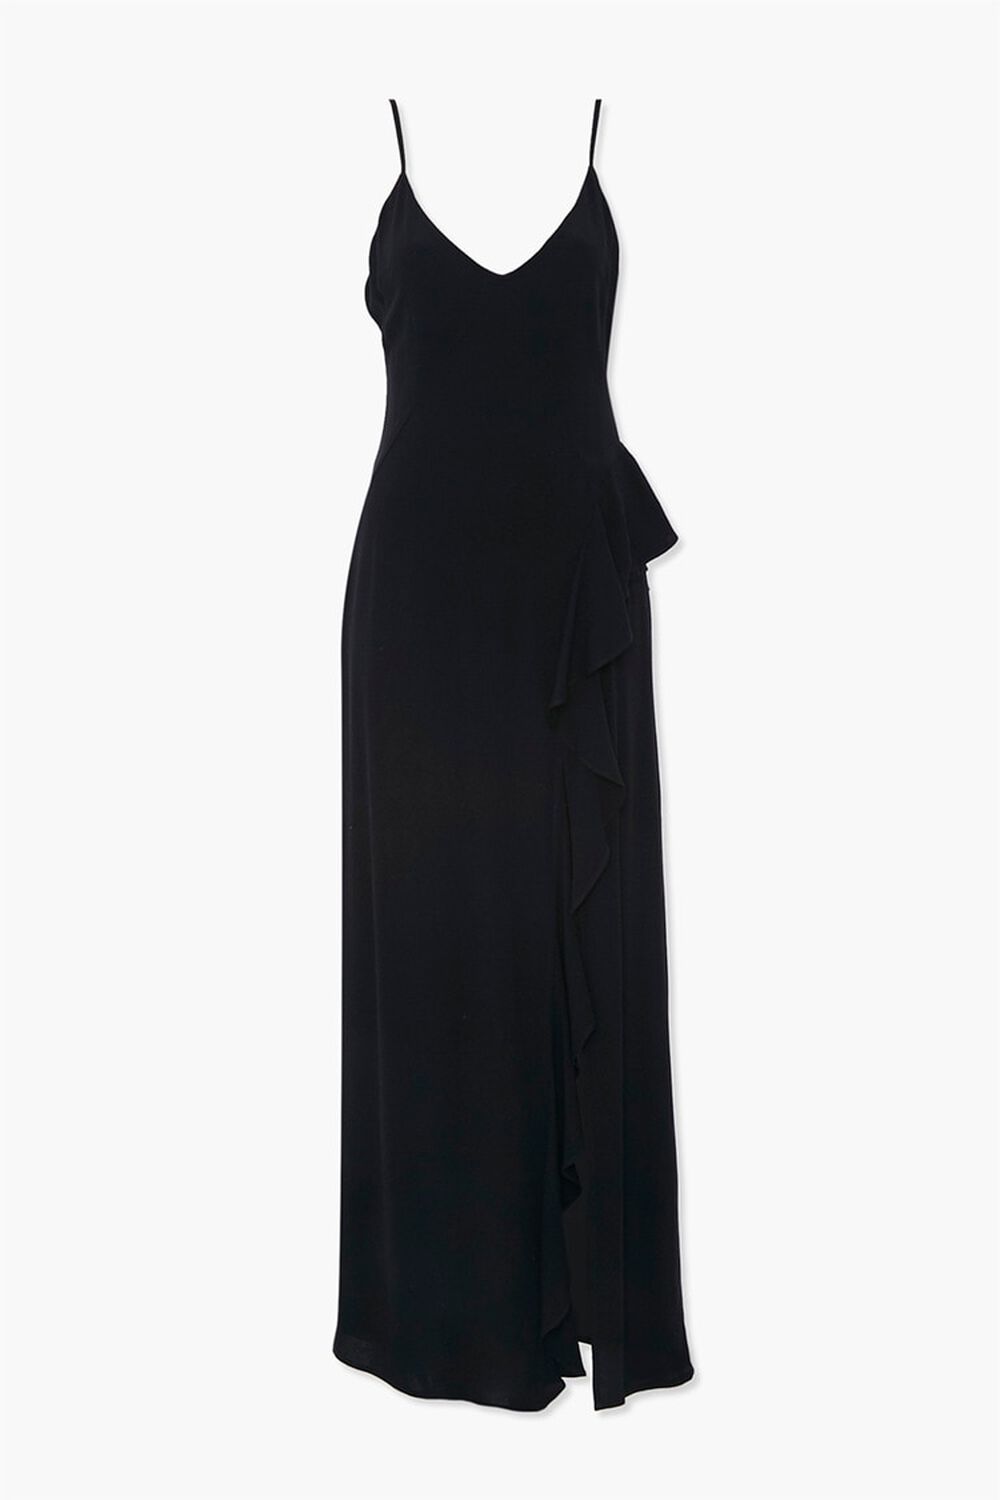 BLACK Ruffle-Trim Maxi Dress, image 1